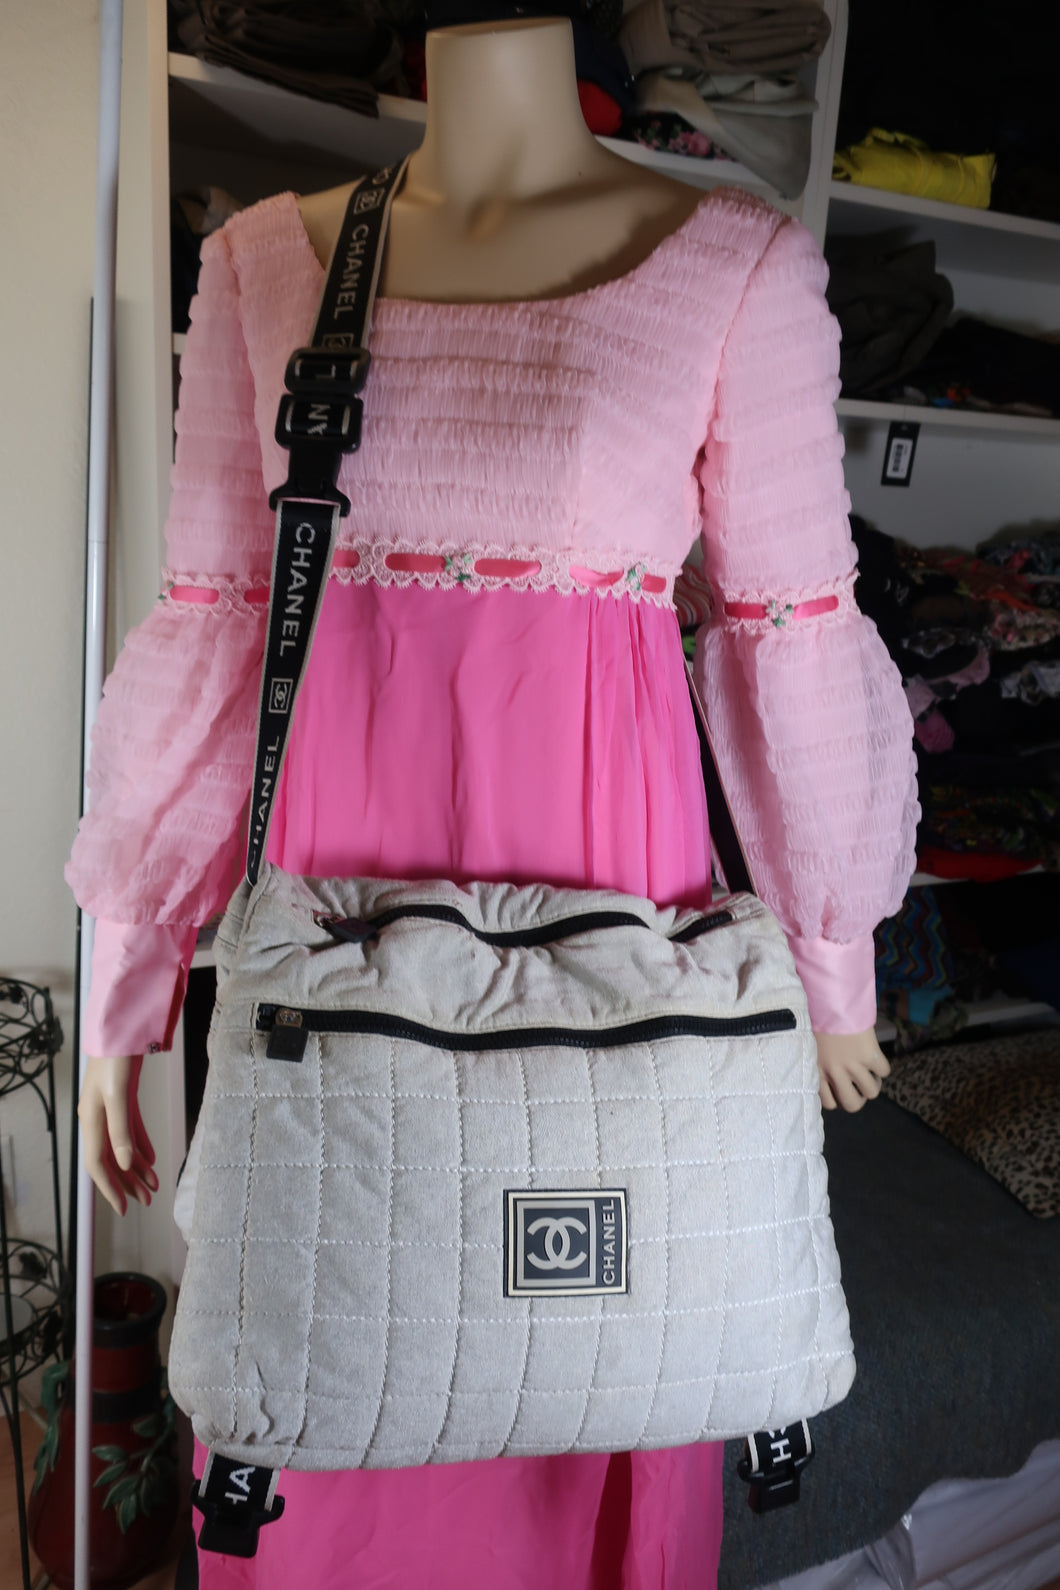 CHANEL Large XL Thick Multi-pocket Unisex Messenger Lap Top Offic Shoulder Bag